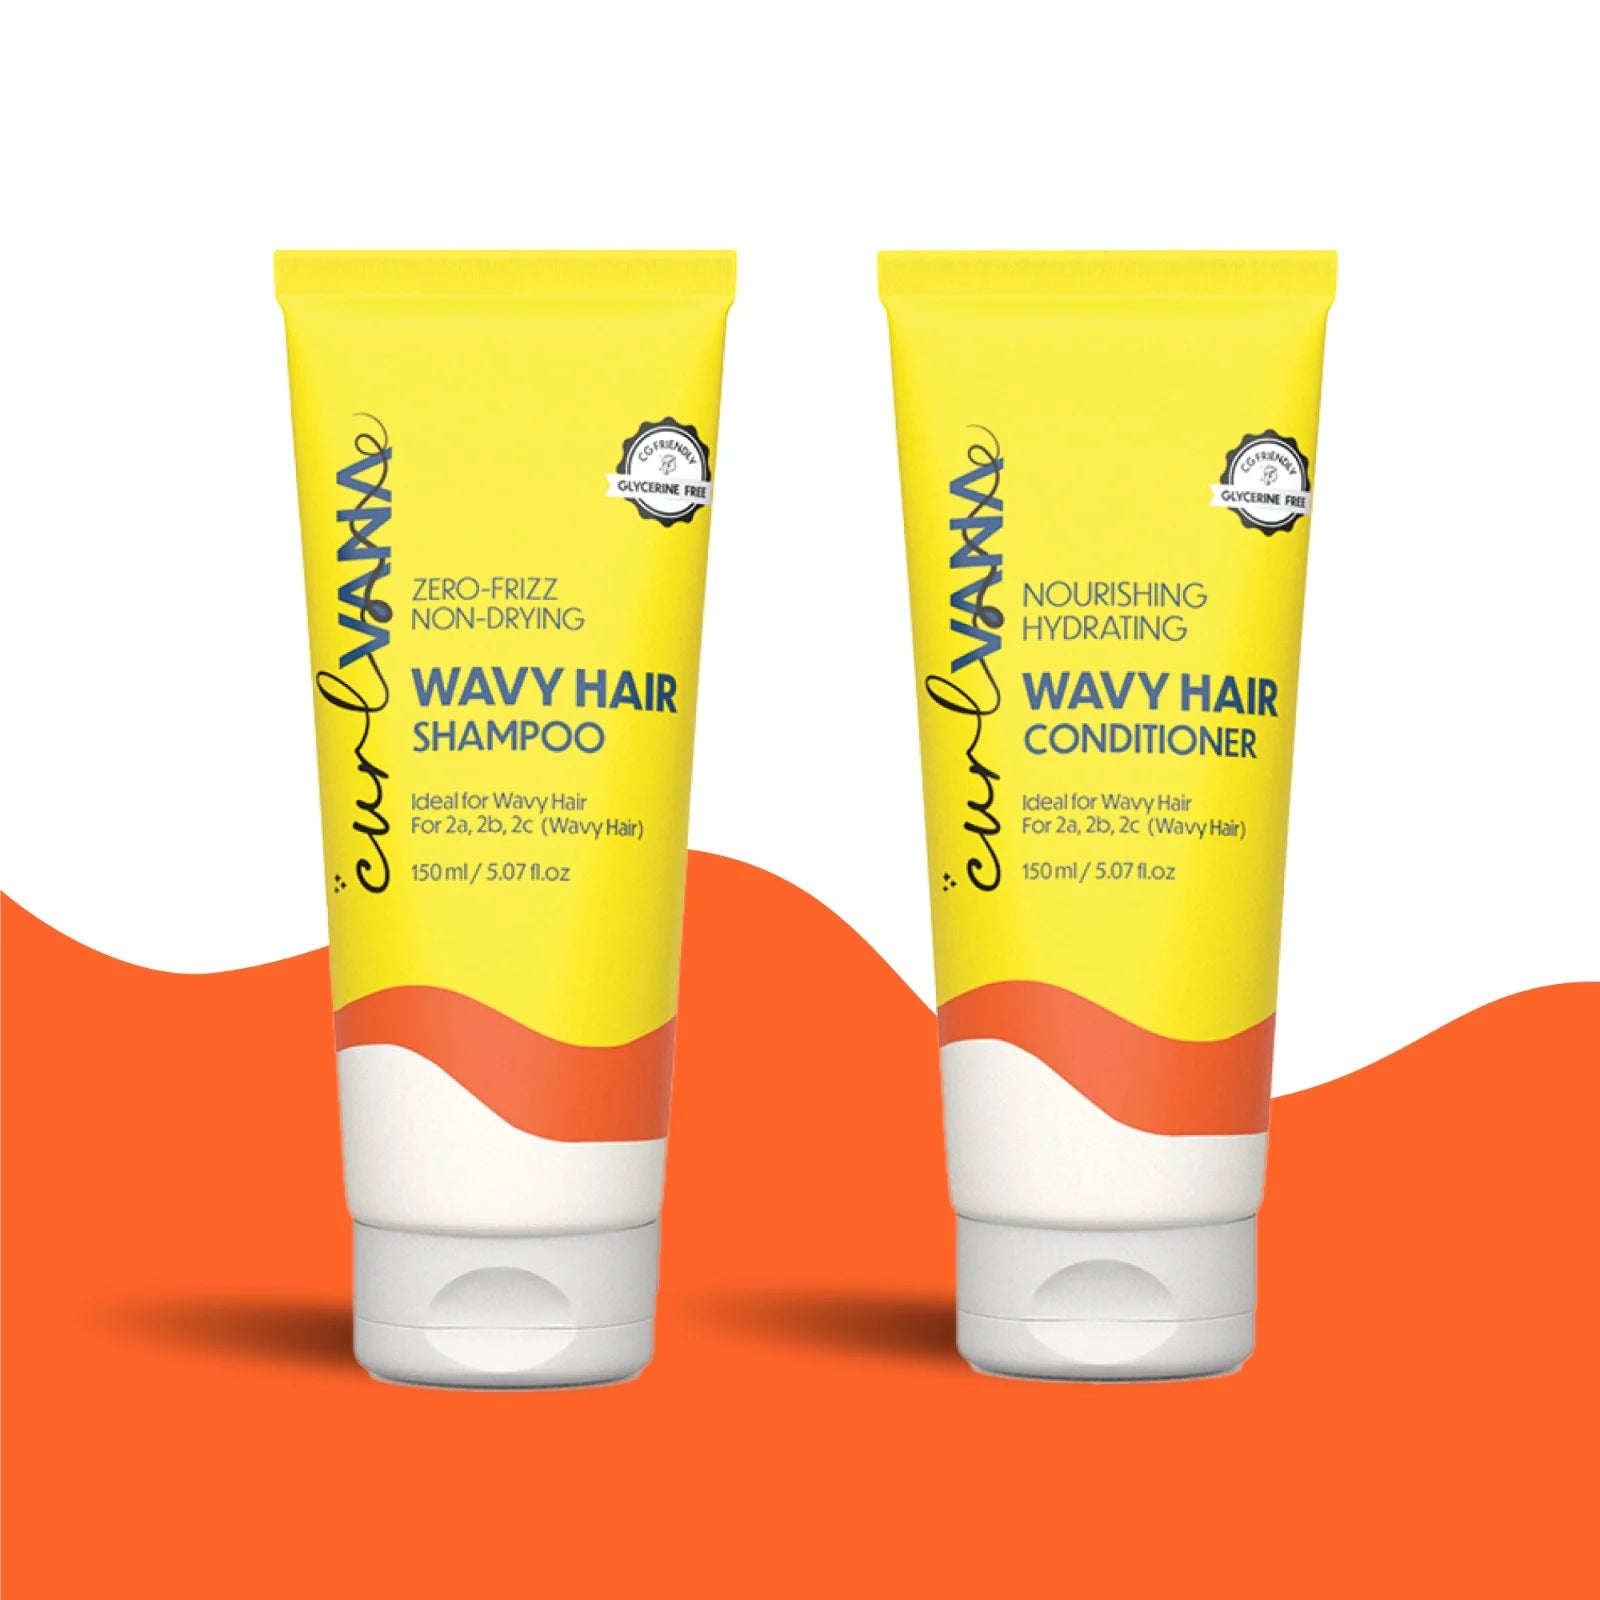 Curlvana Wavy Hair Care Range with Shampoo (150ml) & Conditioner (150ml)